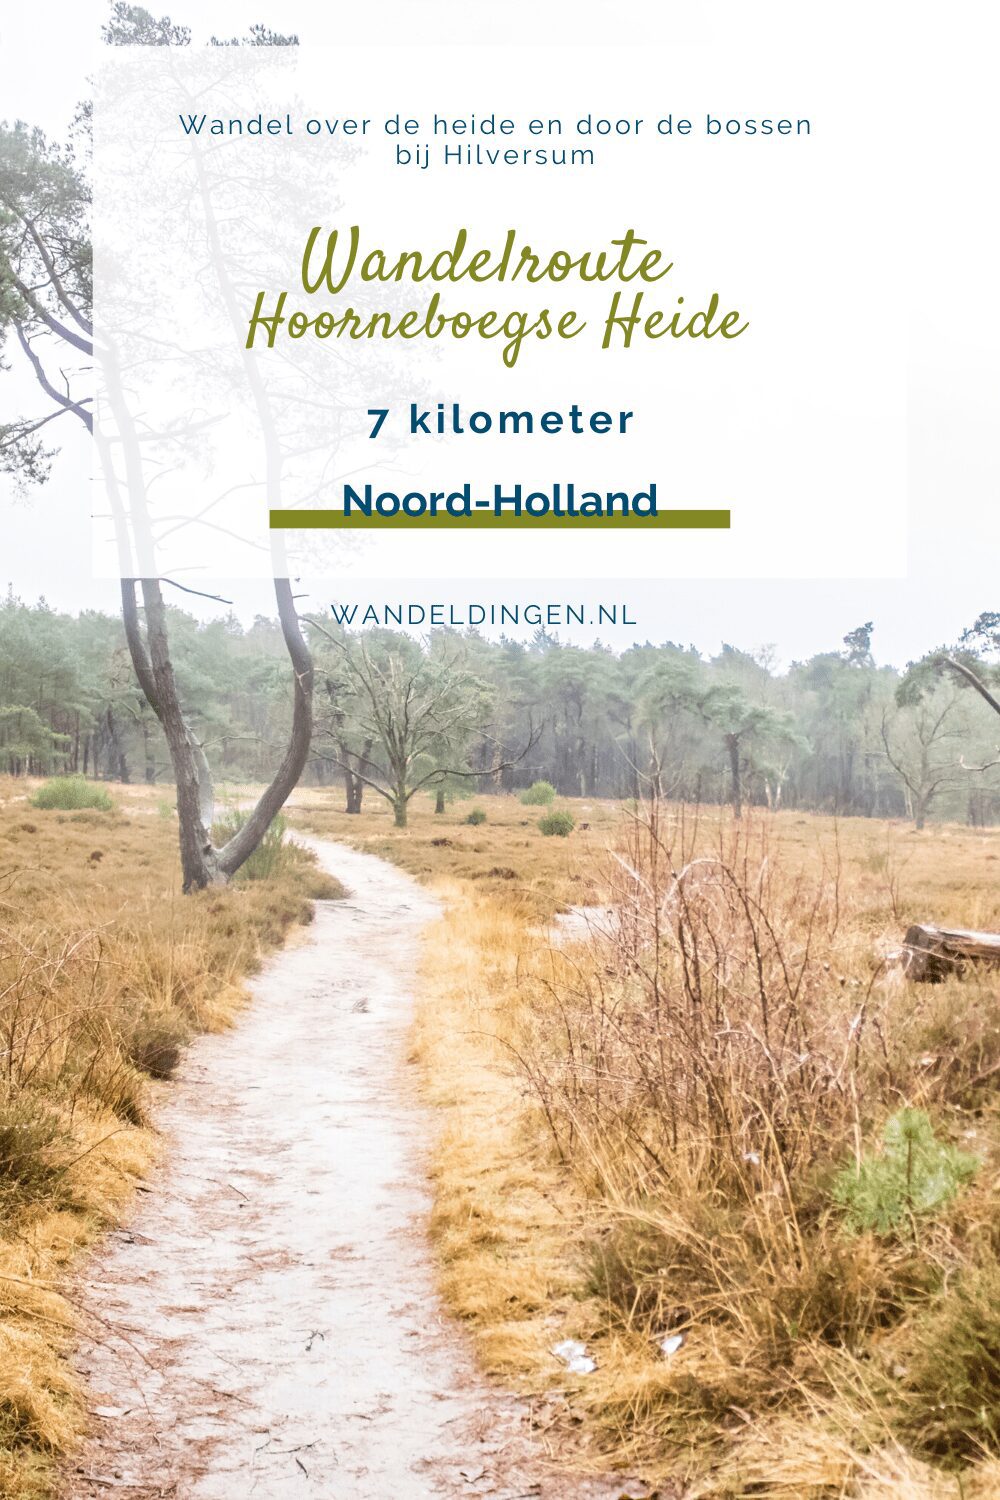 Hoorneboegse Heide